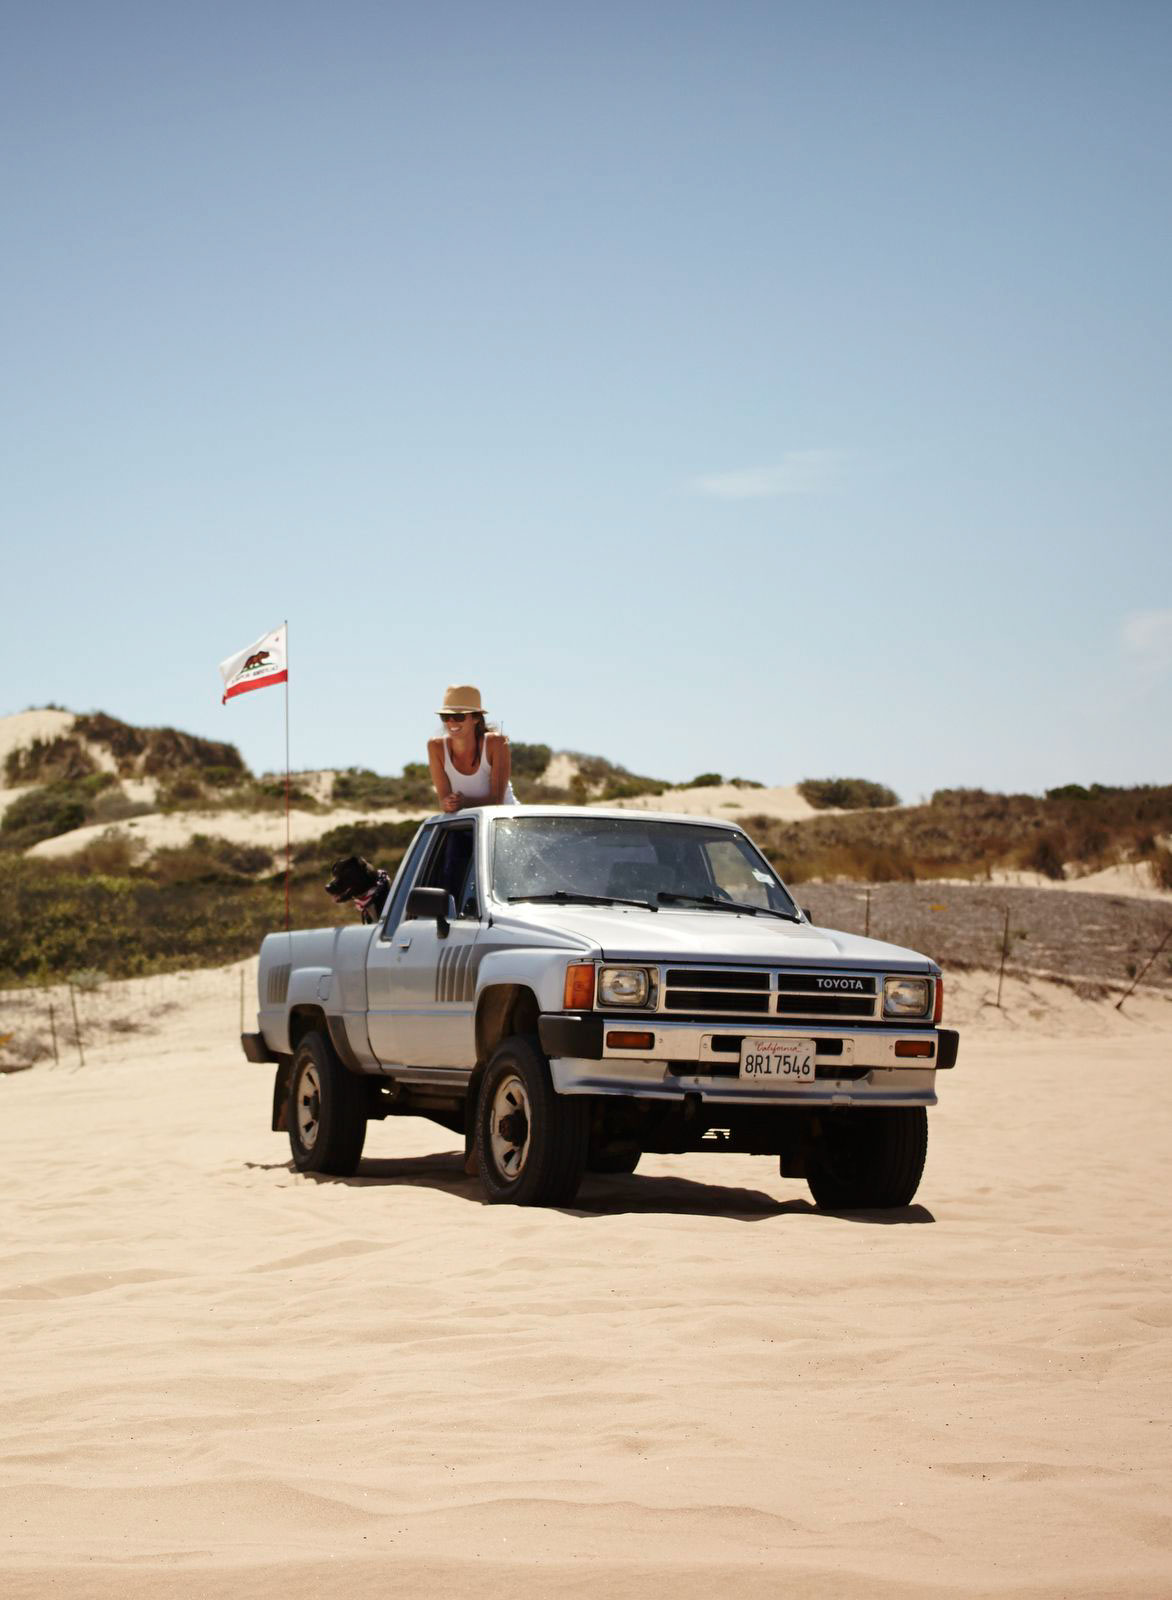 California lifestyle adventure portrait sanddunes RoadTrip lifestylebranding toyota neverstopexploring